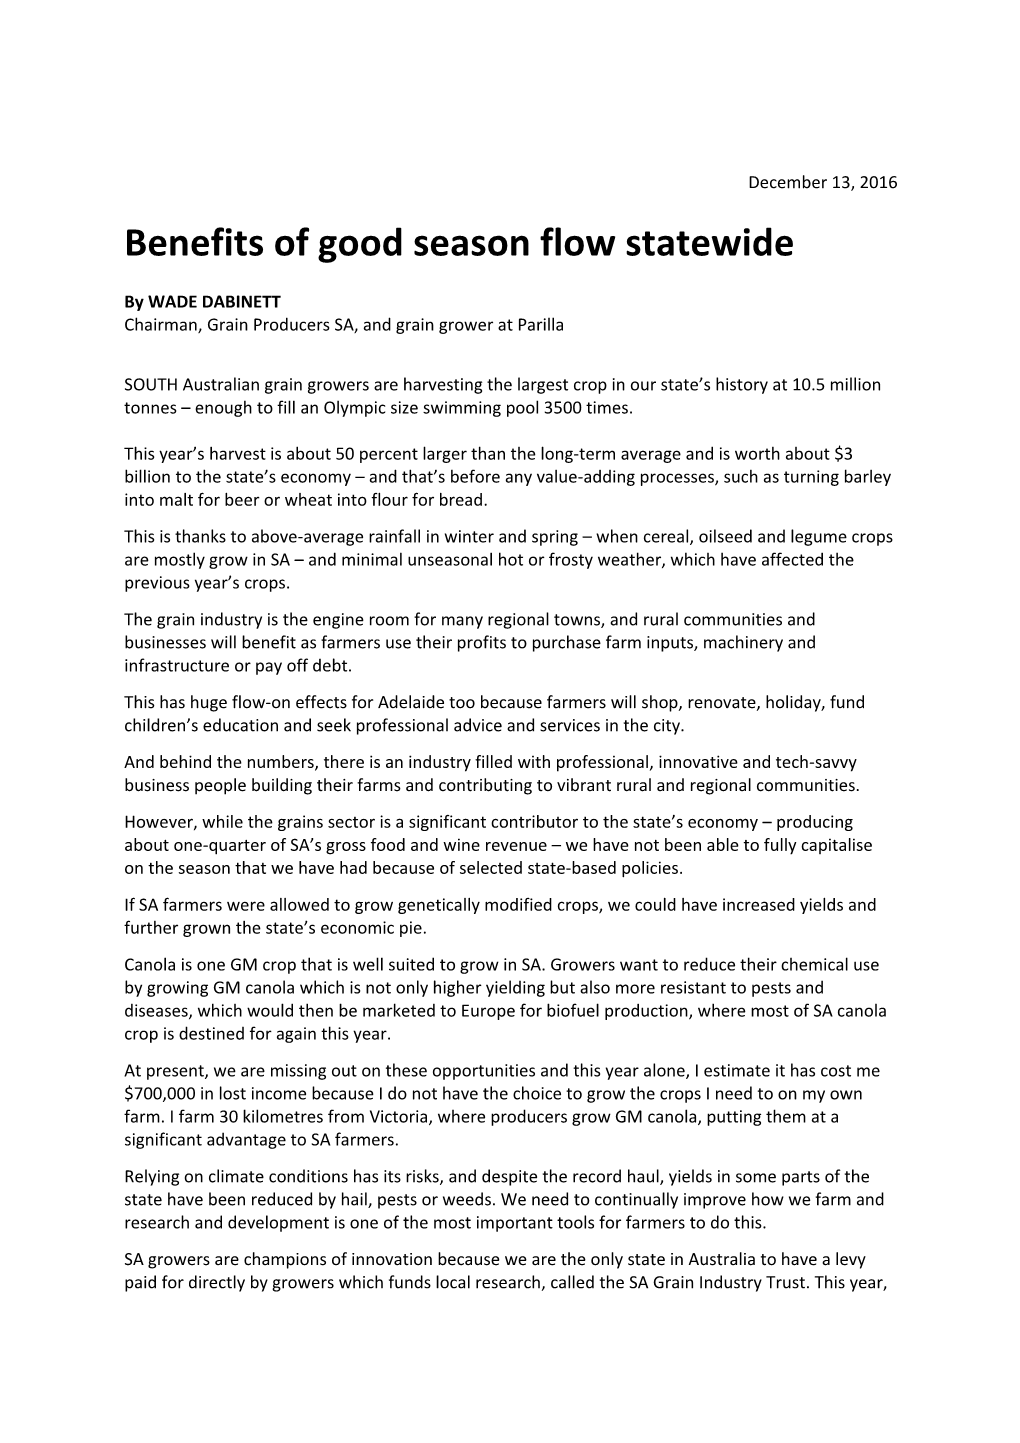 Benefits of Good Season Flow Statewide